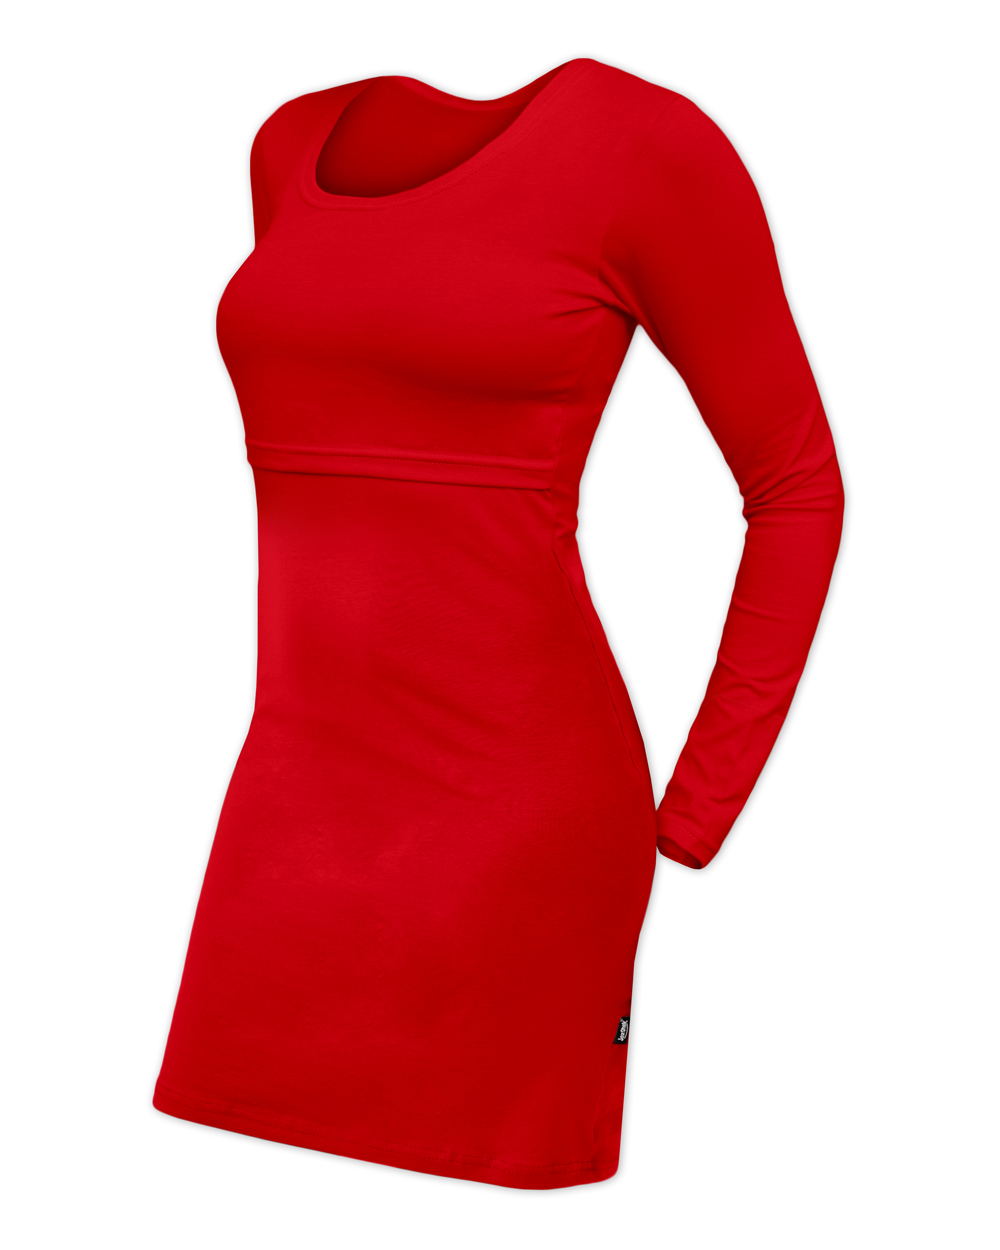 Breast-feeding dress Elena, long sleeves, red